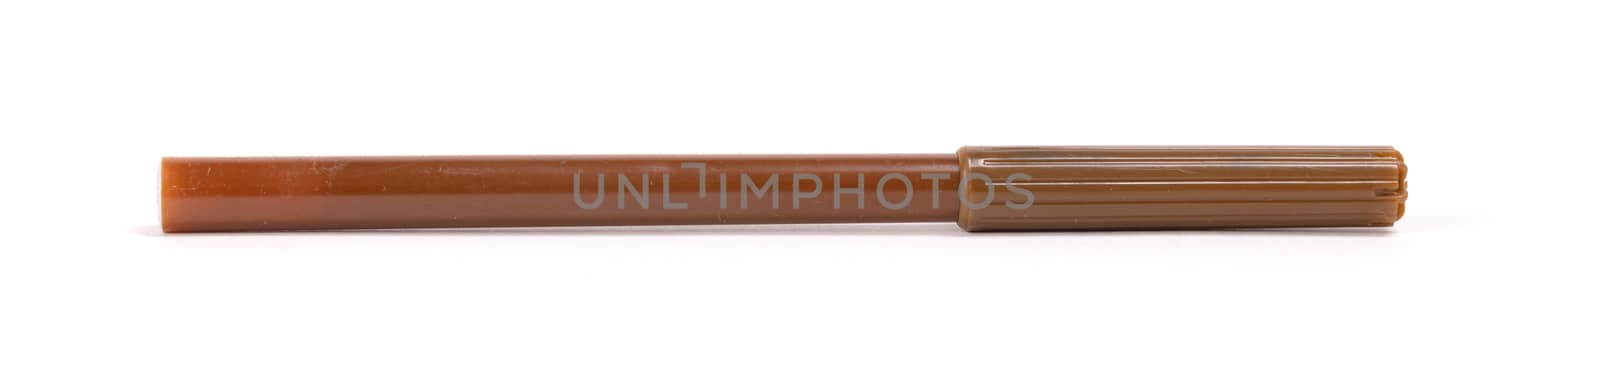 Brown felt-tip pen isolated by michaklootwijk